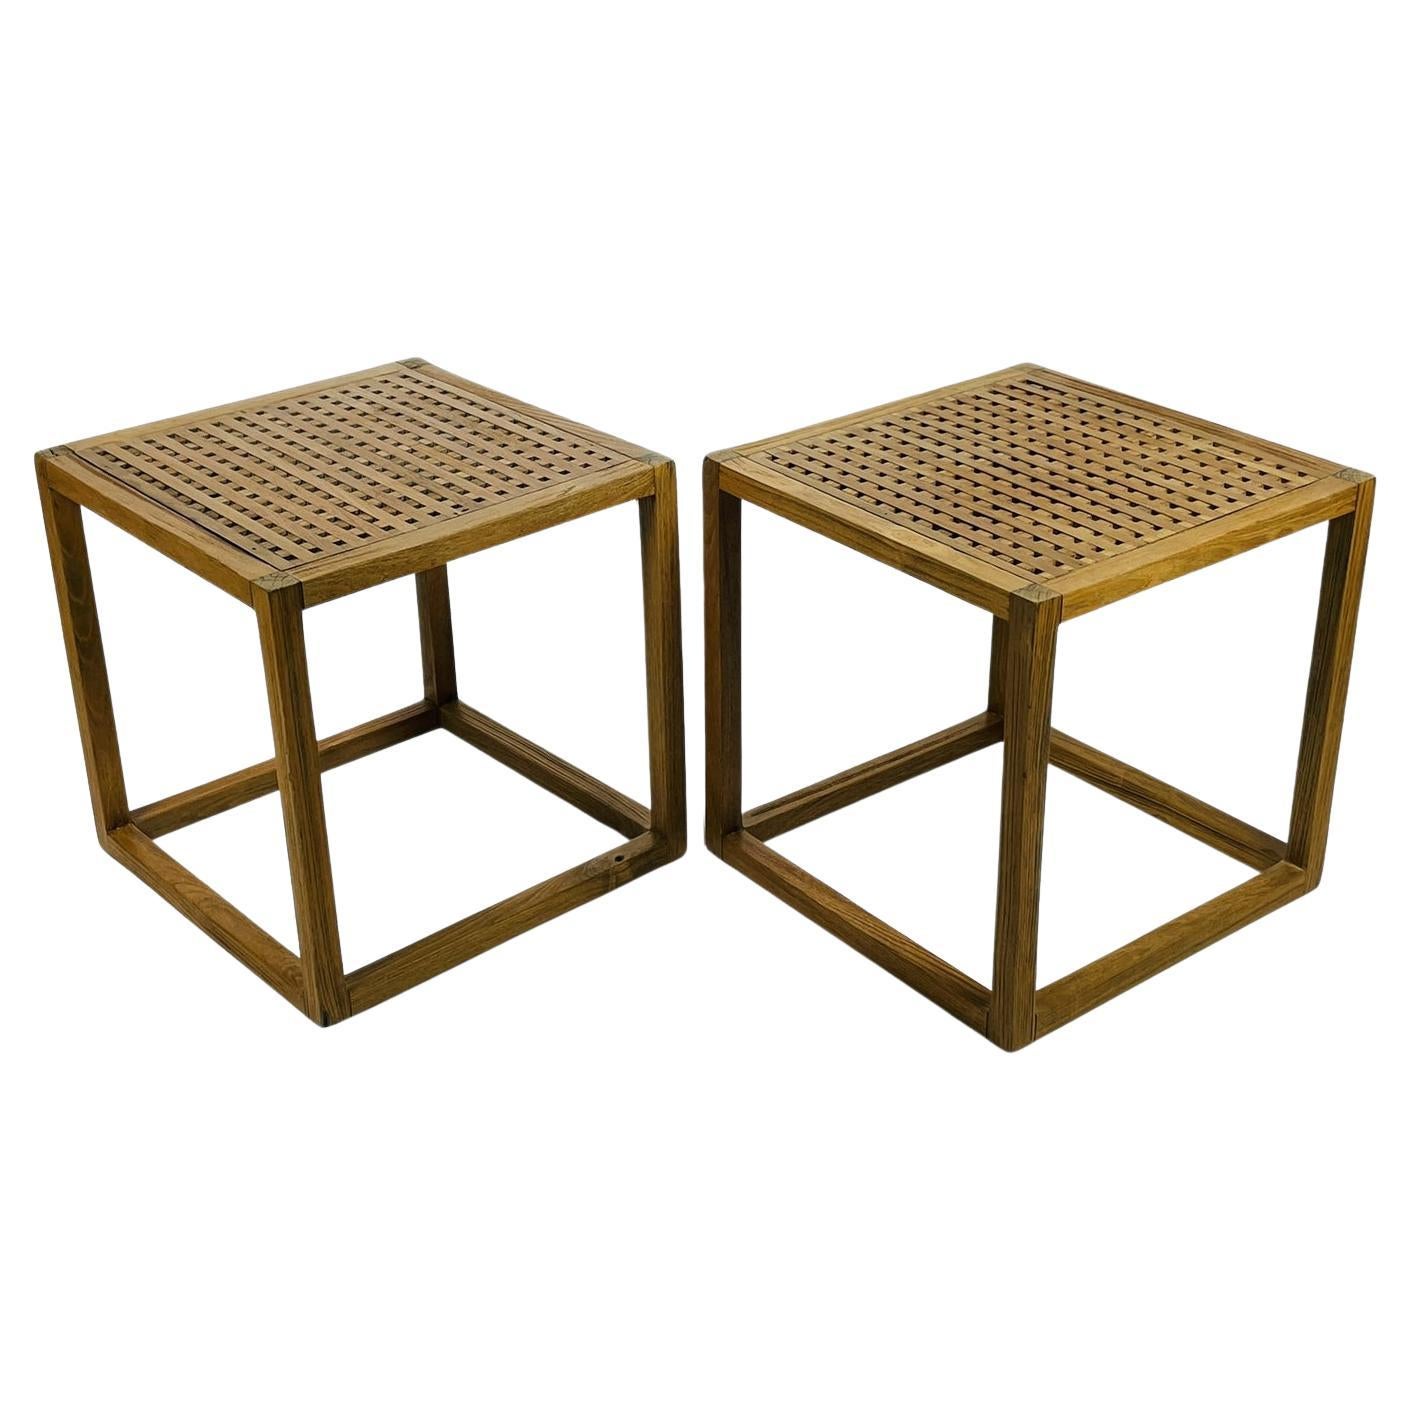 Pair of Teak Lattice Cube Tables by Summit Furniture